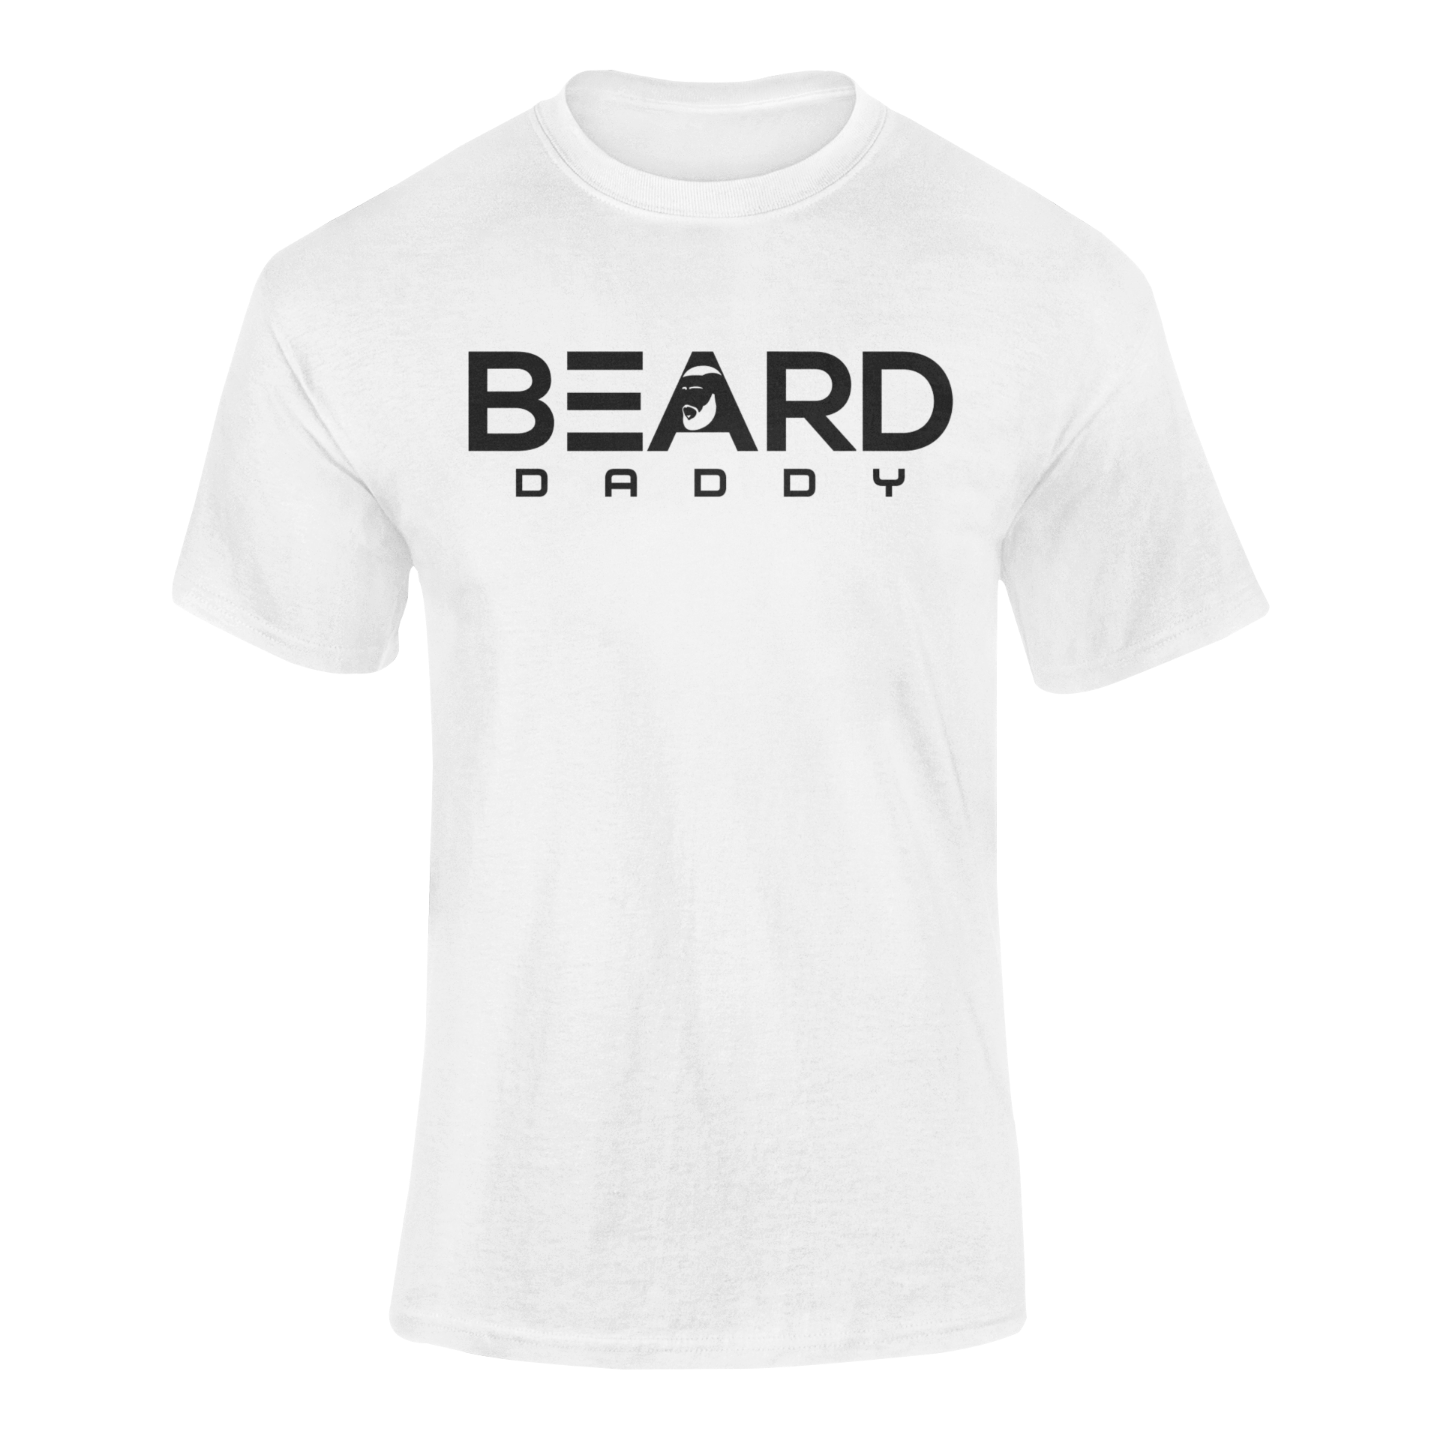 x Beard Daddy Logo T-Shirt x